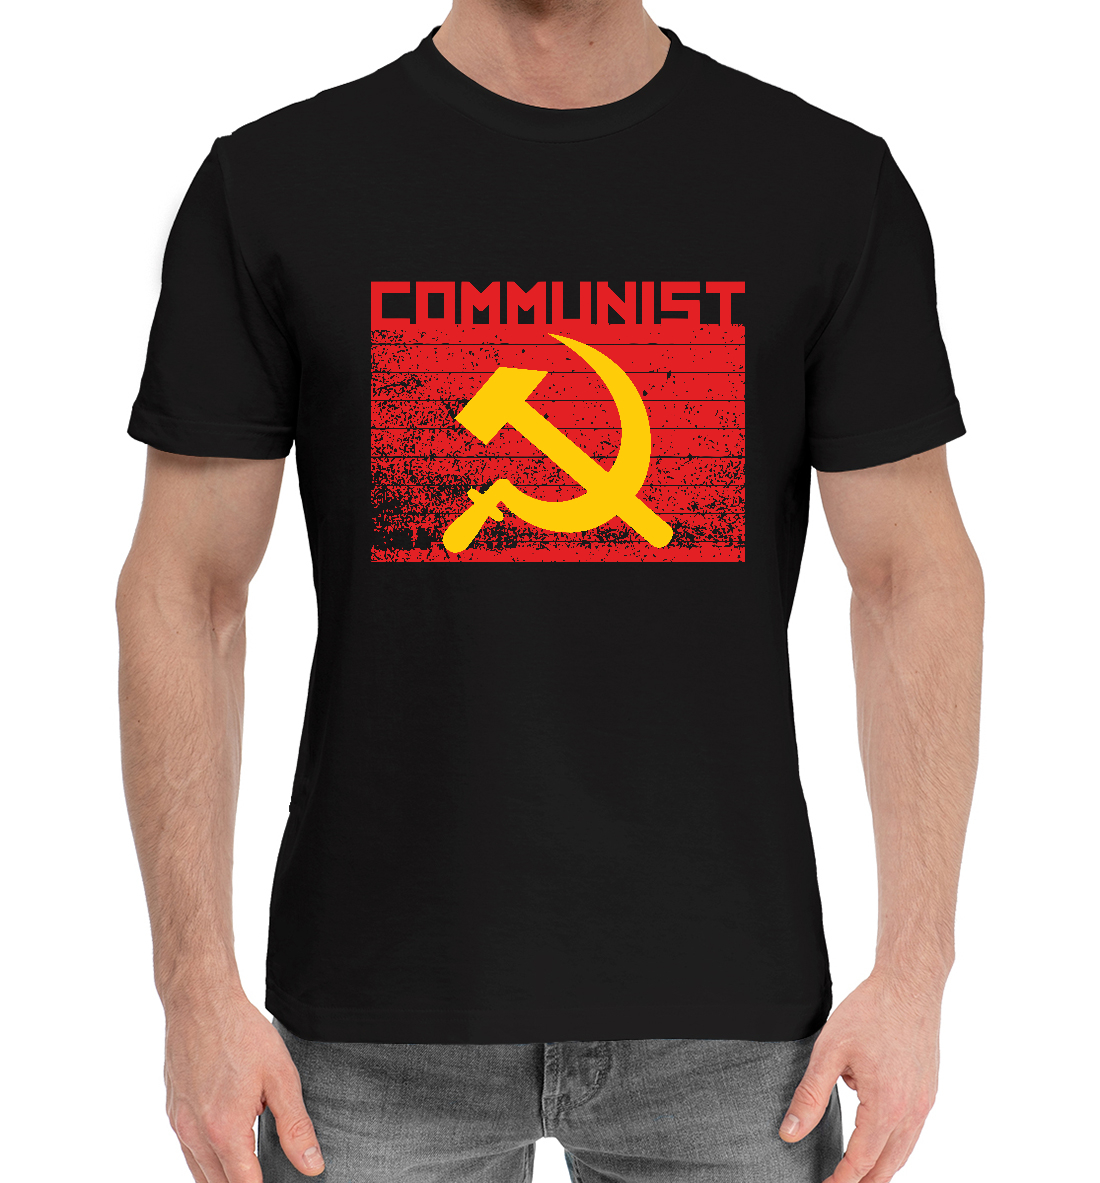 Мужская Хлопковая футболка с принтом Коммунист, артикул SSS-299397-hfu-2mp